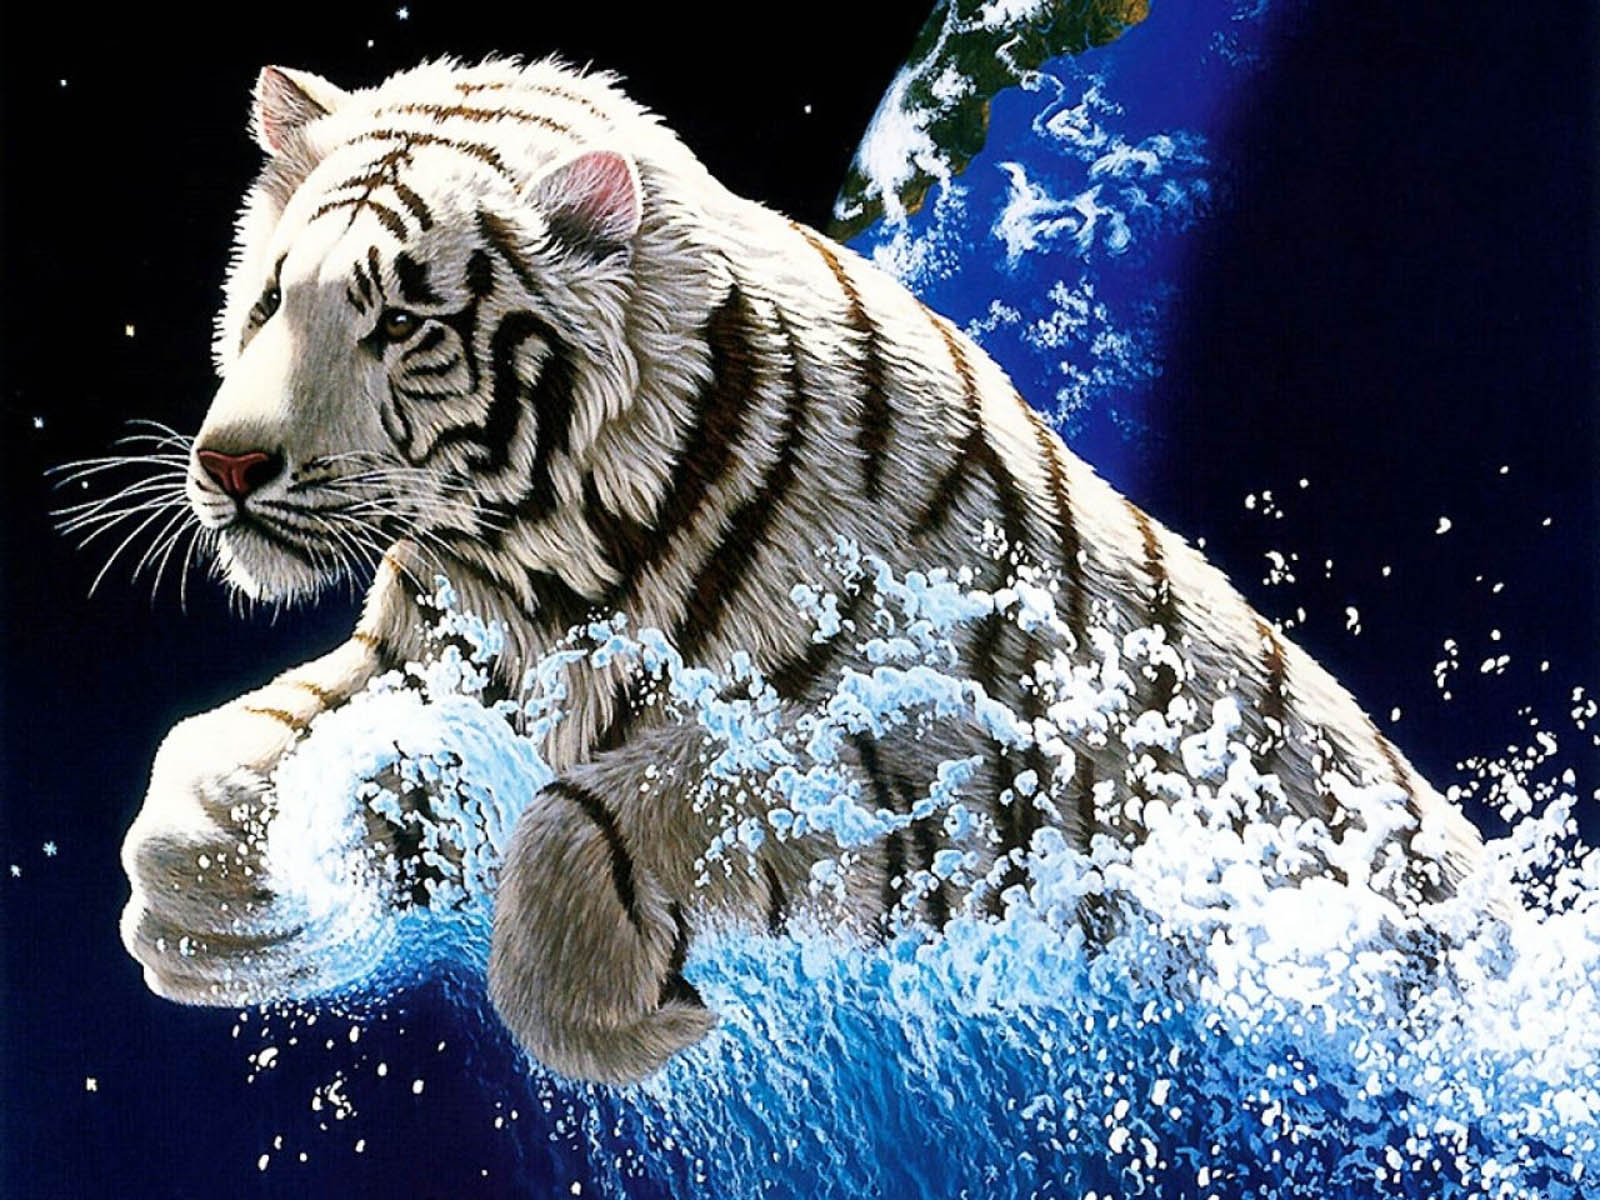 watching the Tiger 3D Wallpapers Tiger 3D Desktop Wallpapers Tiger